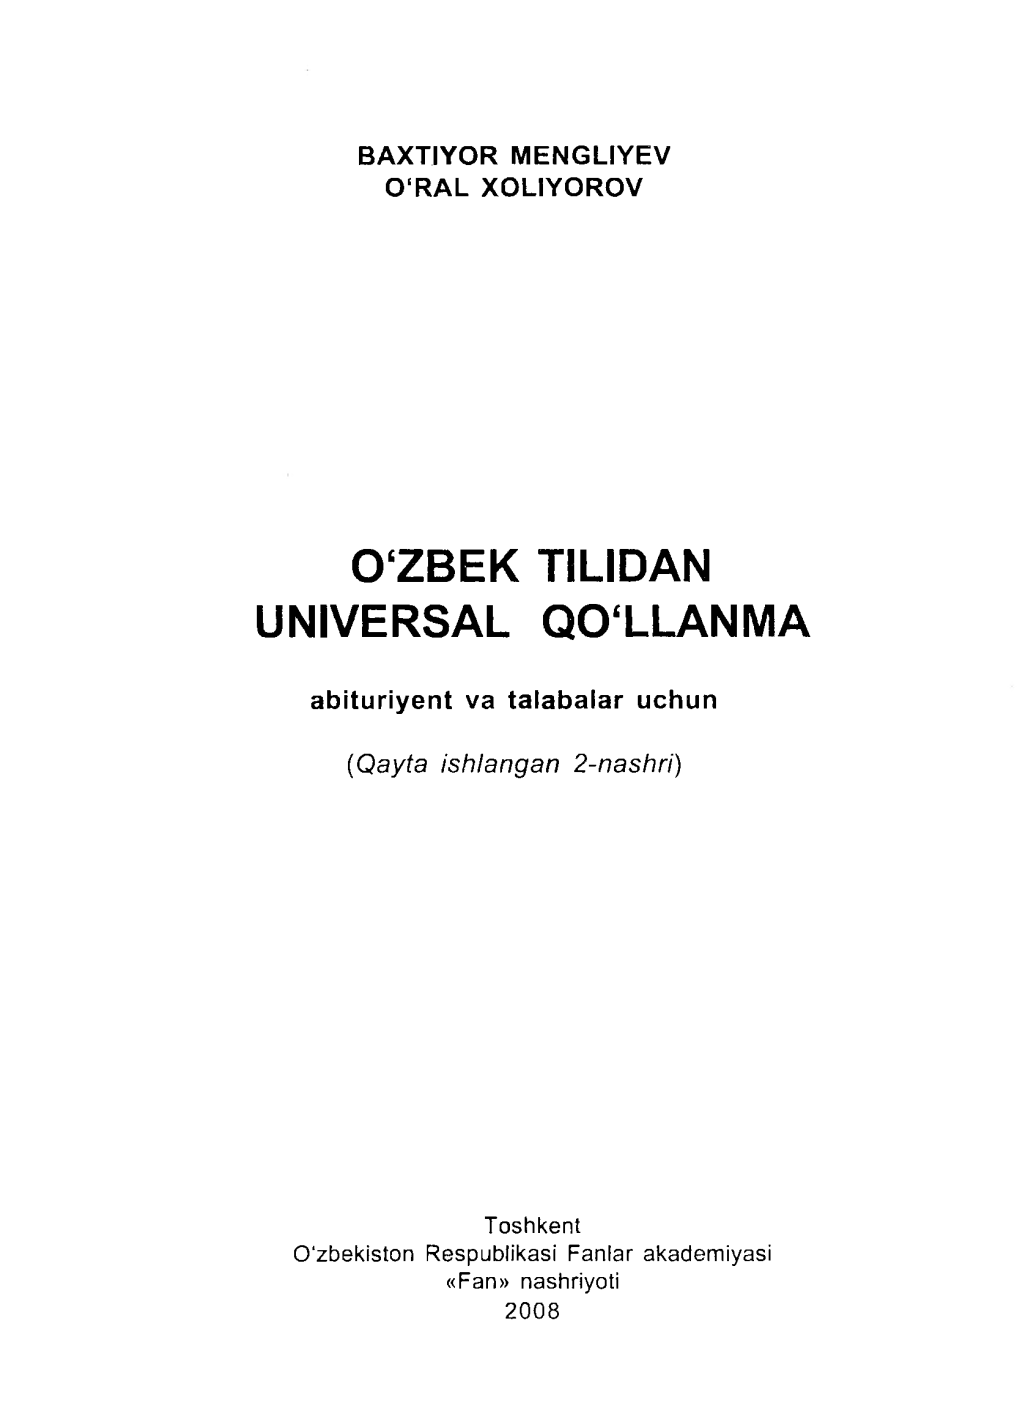 O'zbek Tilidan Universal Qo'llanma